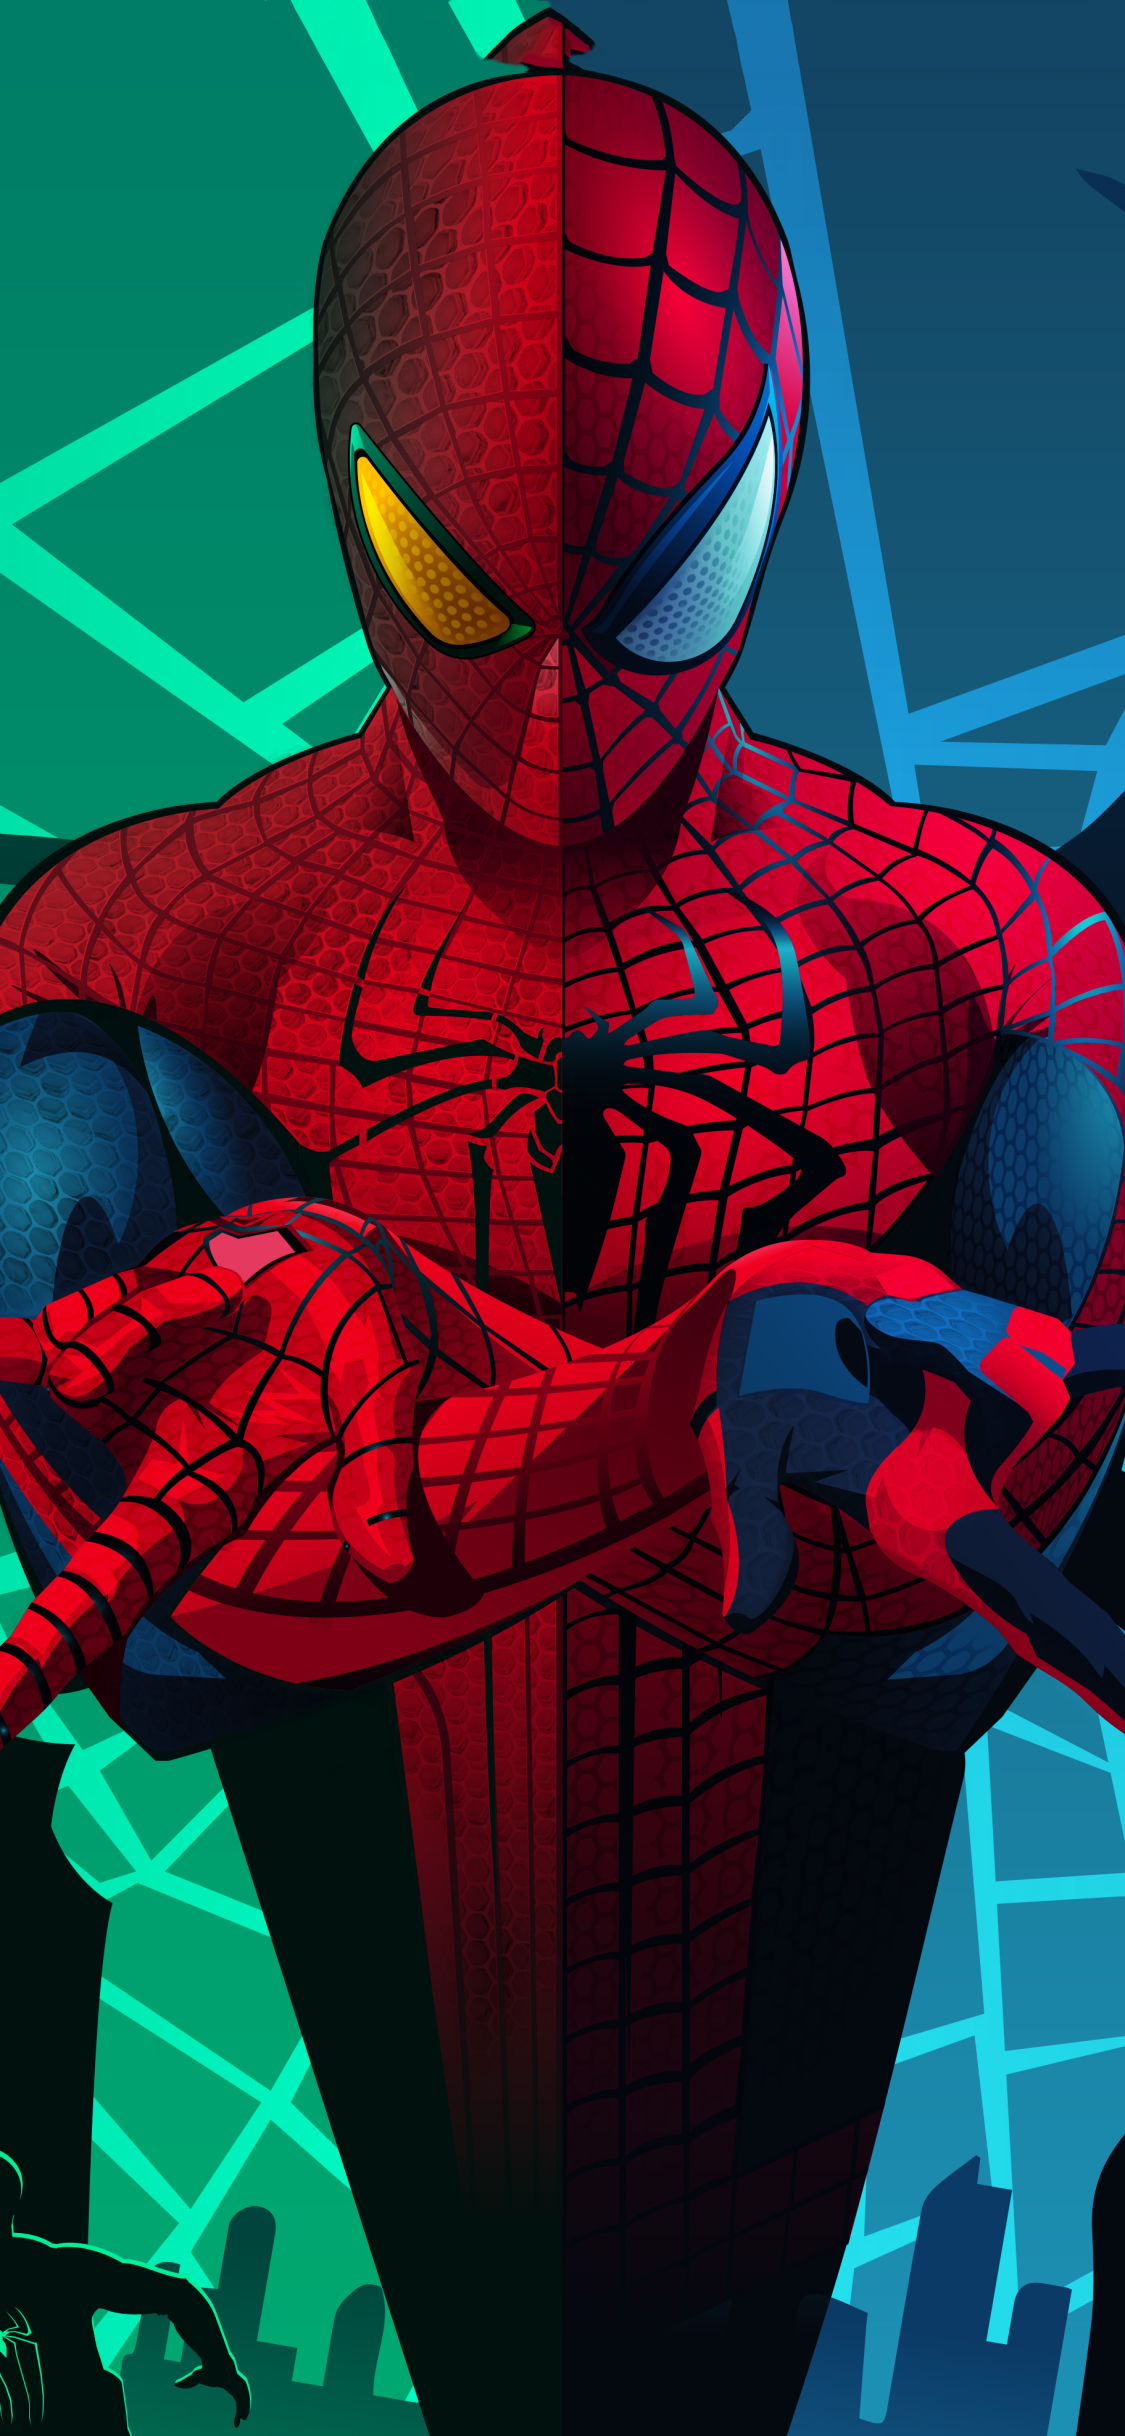 Descarga gratuita de fondo de pantalla para móvil de Películas, El Sorprendente Hombre Araña, Hombre Araña, Spider Man, Peter Parker, El Sorprendente Hombre Araña 2: La Amenaza De Electro, El Increible Hombre Araña 2.